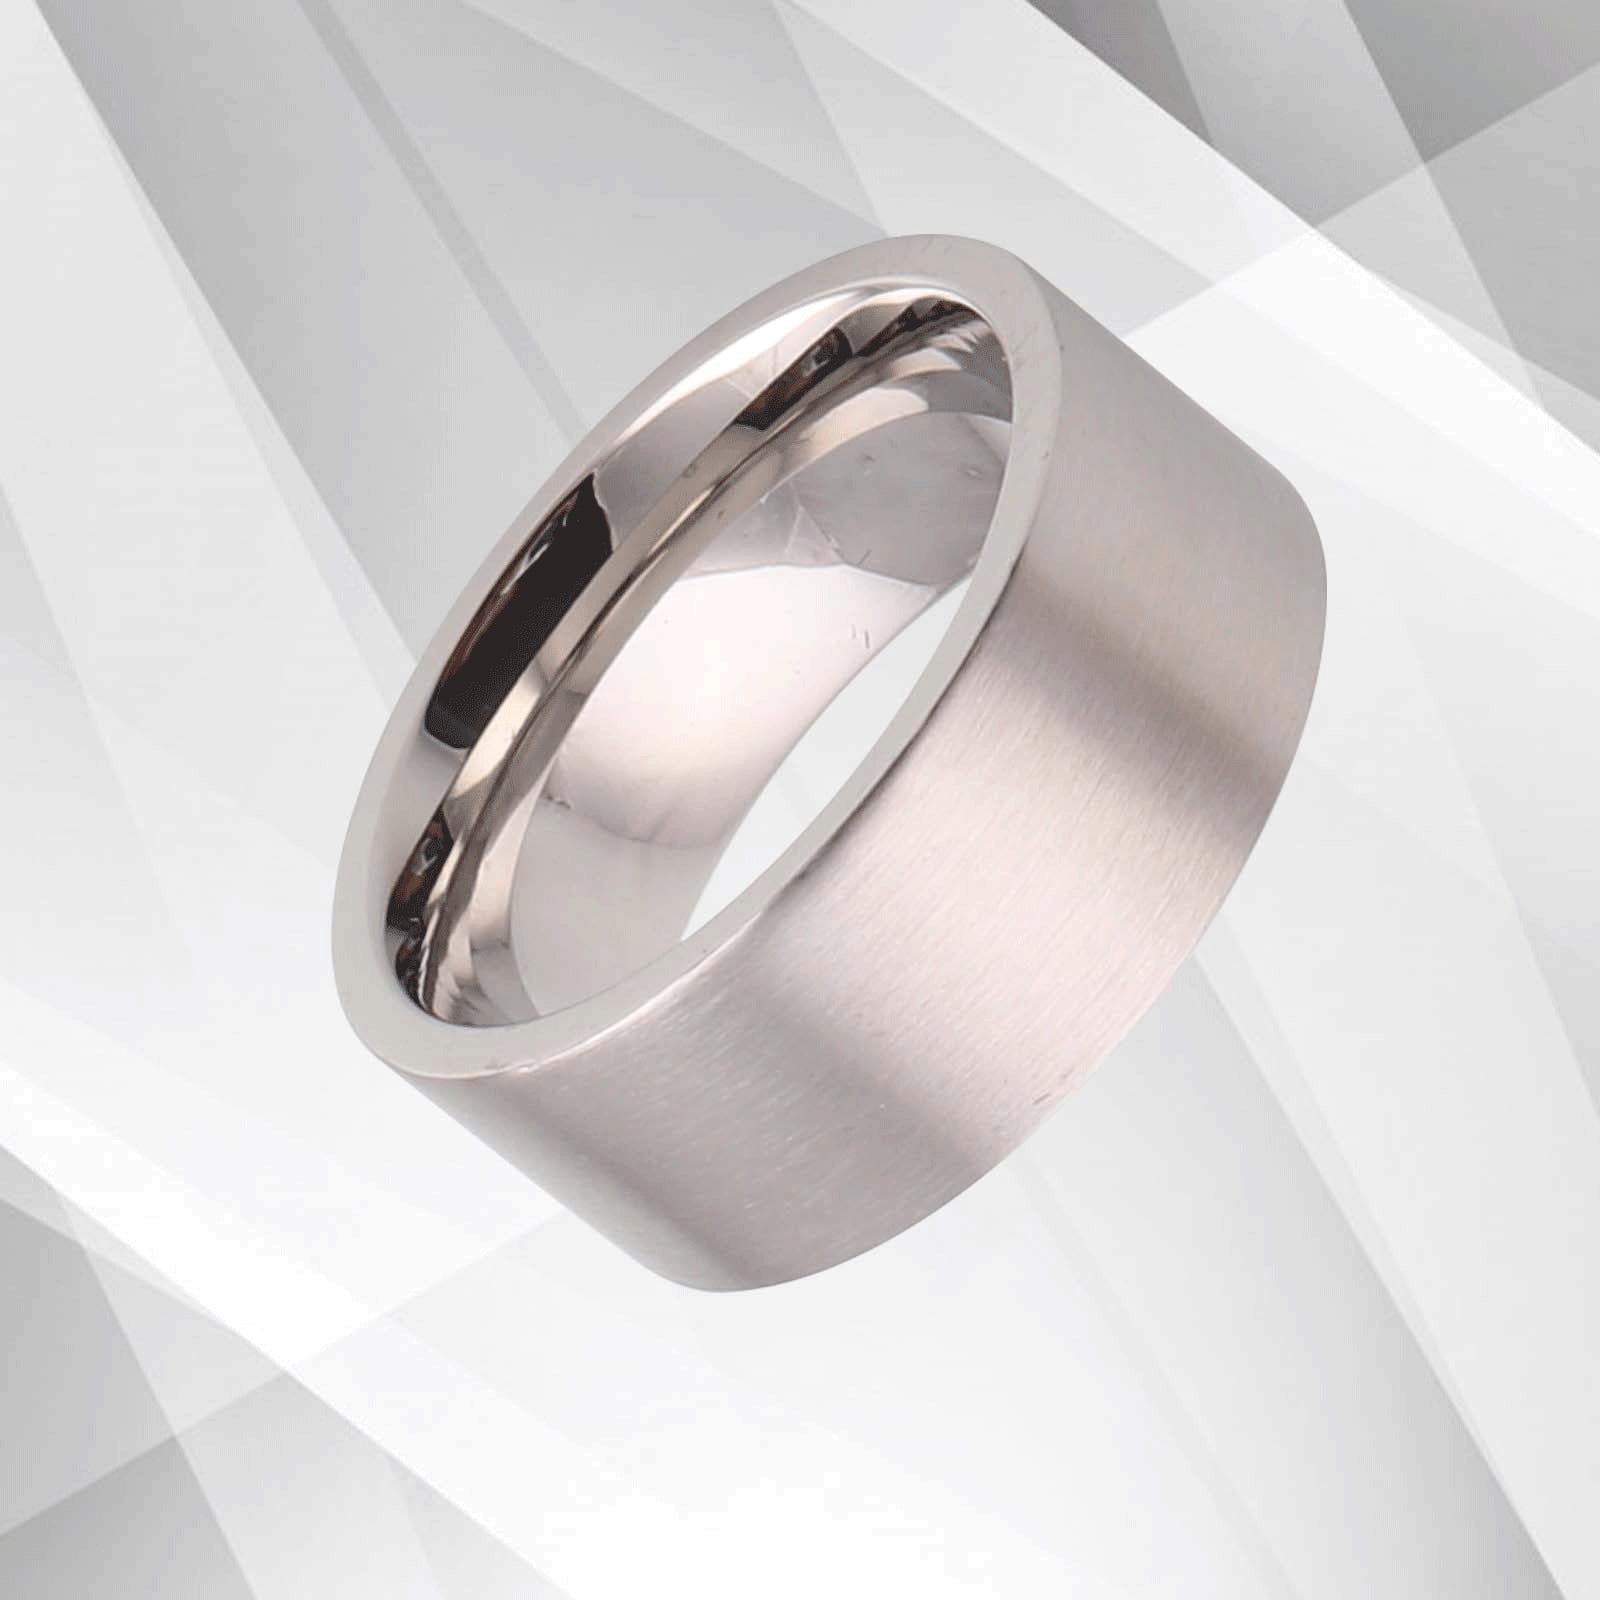 Stylish Designer 8mm Titanium Wedding Band Ring - Comfort Fit, 18Ct White Gold Finish, Men's Engagement Anniversary Gift, Handmade (NDN13A) - Jewelry & Watches - Bijou Her -  -  - 